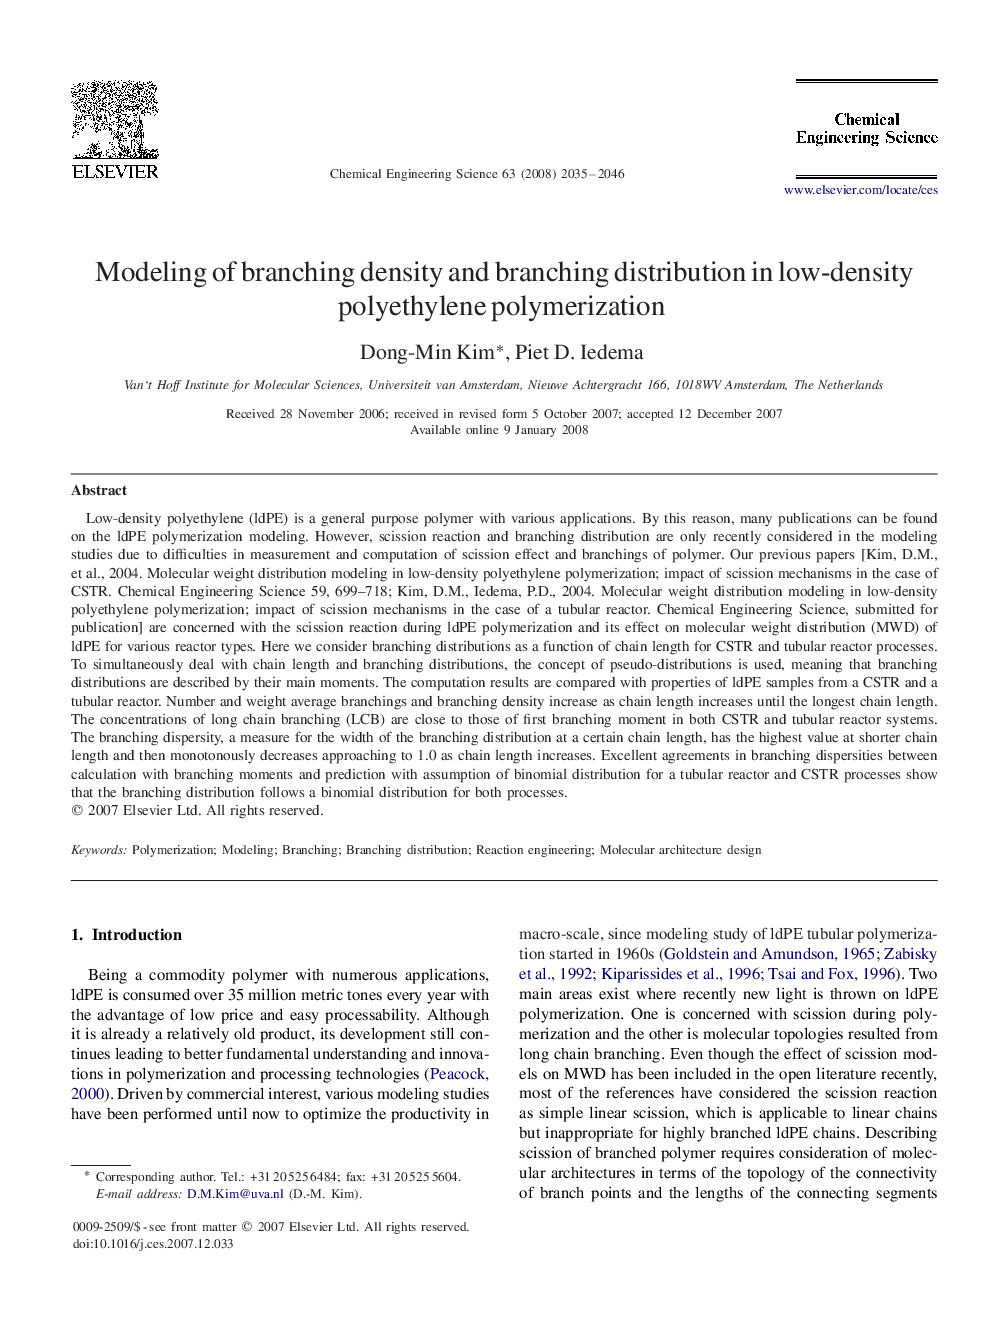 Modeling of branching density and branching distribution in low-density polyethylene polymerization